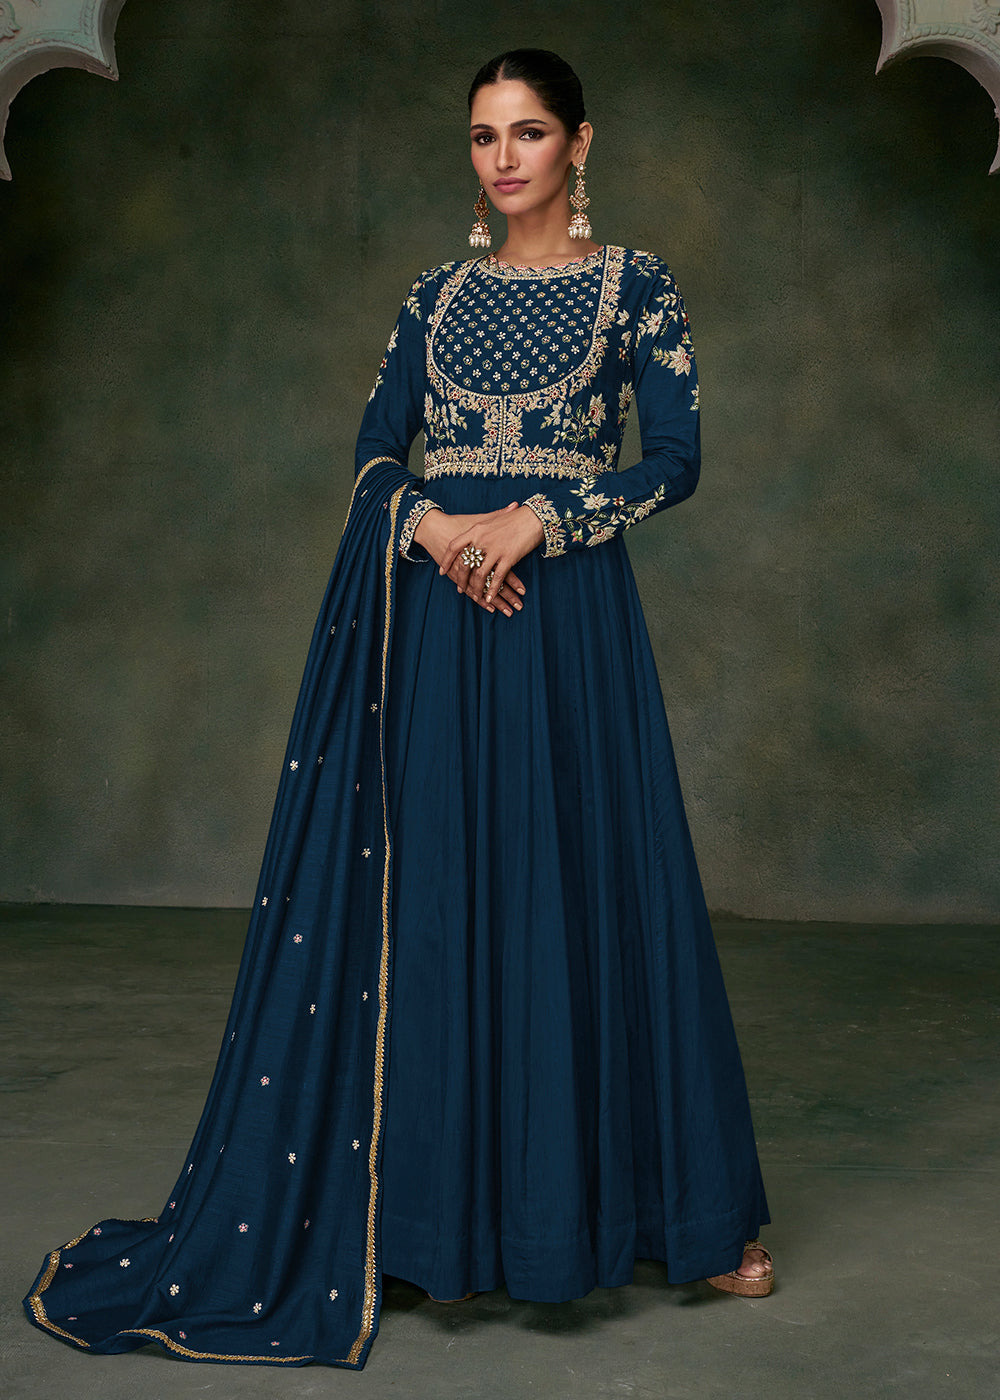 Buy Now Sangeet Wear Blue Premium Silk Indian Anarkali Gown Online in USA, UK, Australia, Canada & Worldwide at Empress Clothing.